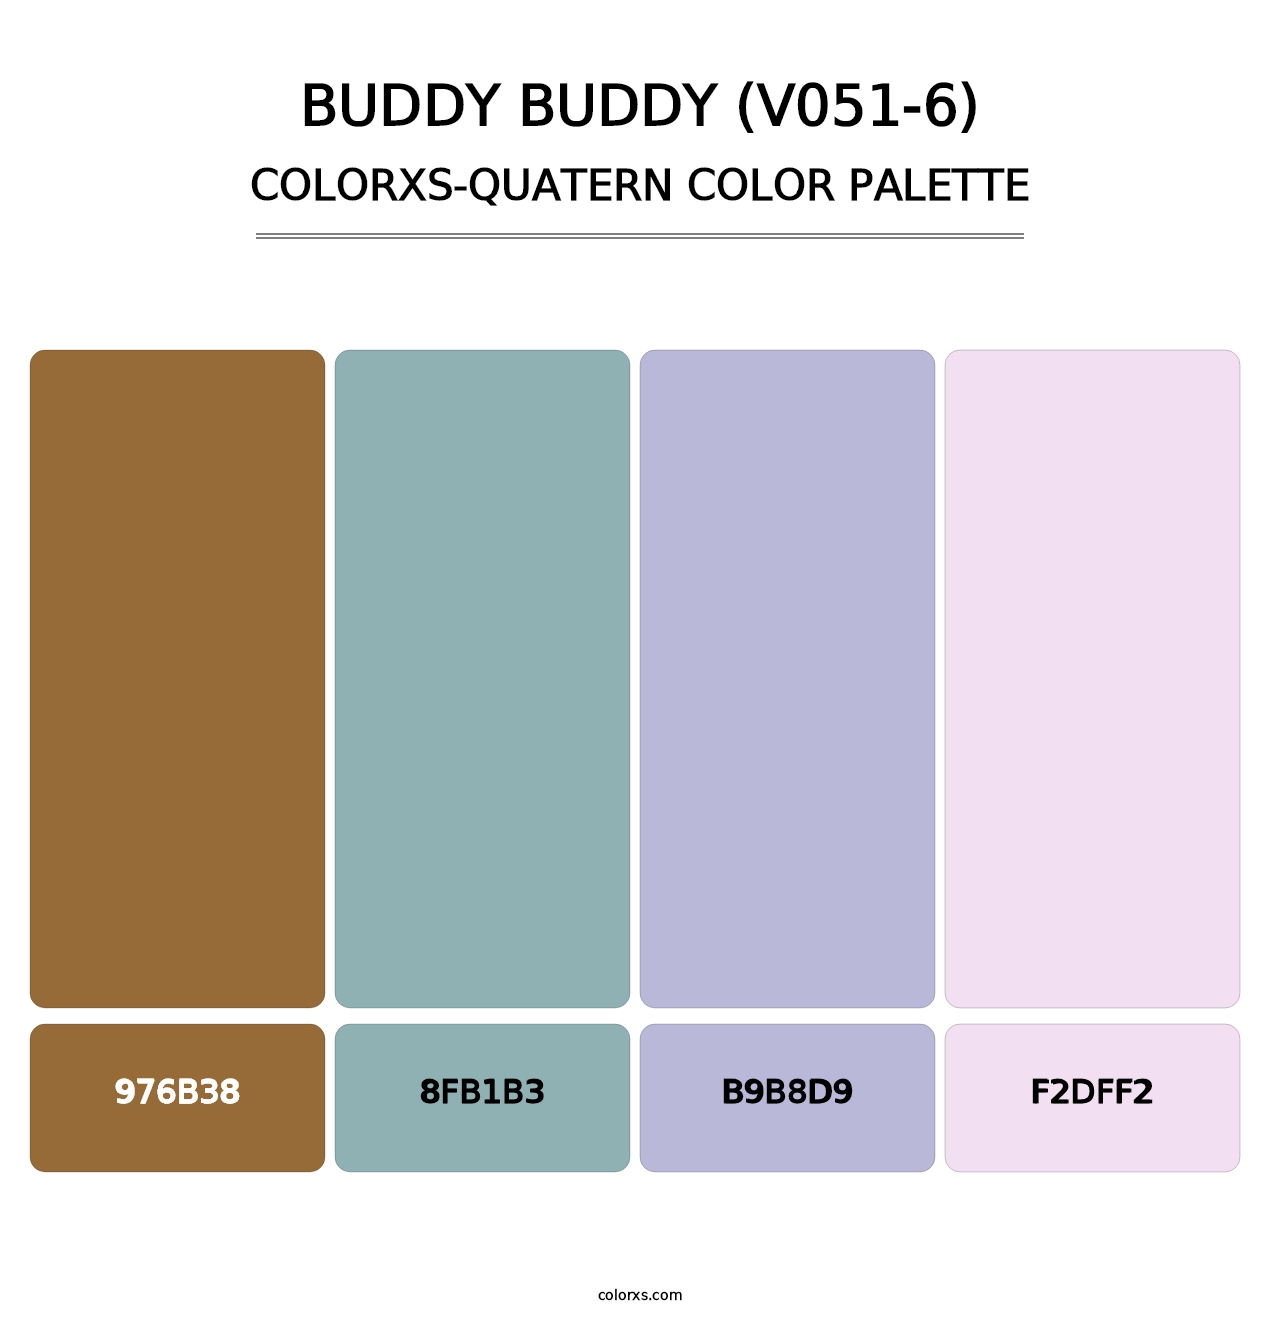 Buddy Buddy (V051-6) - Colorxs Quatern Palette